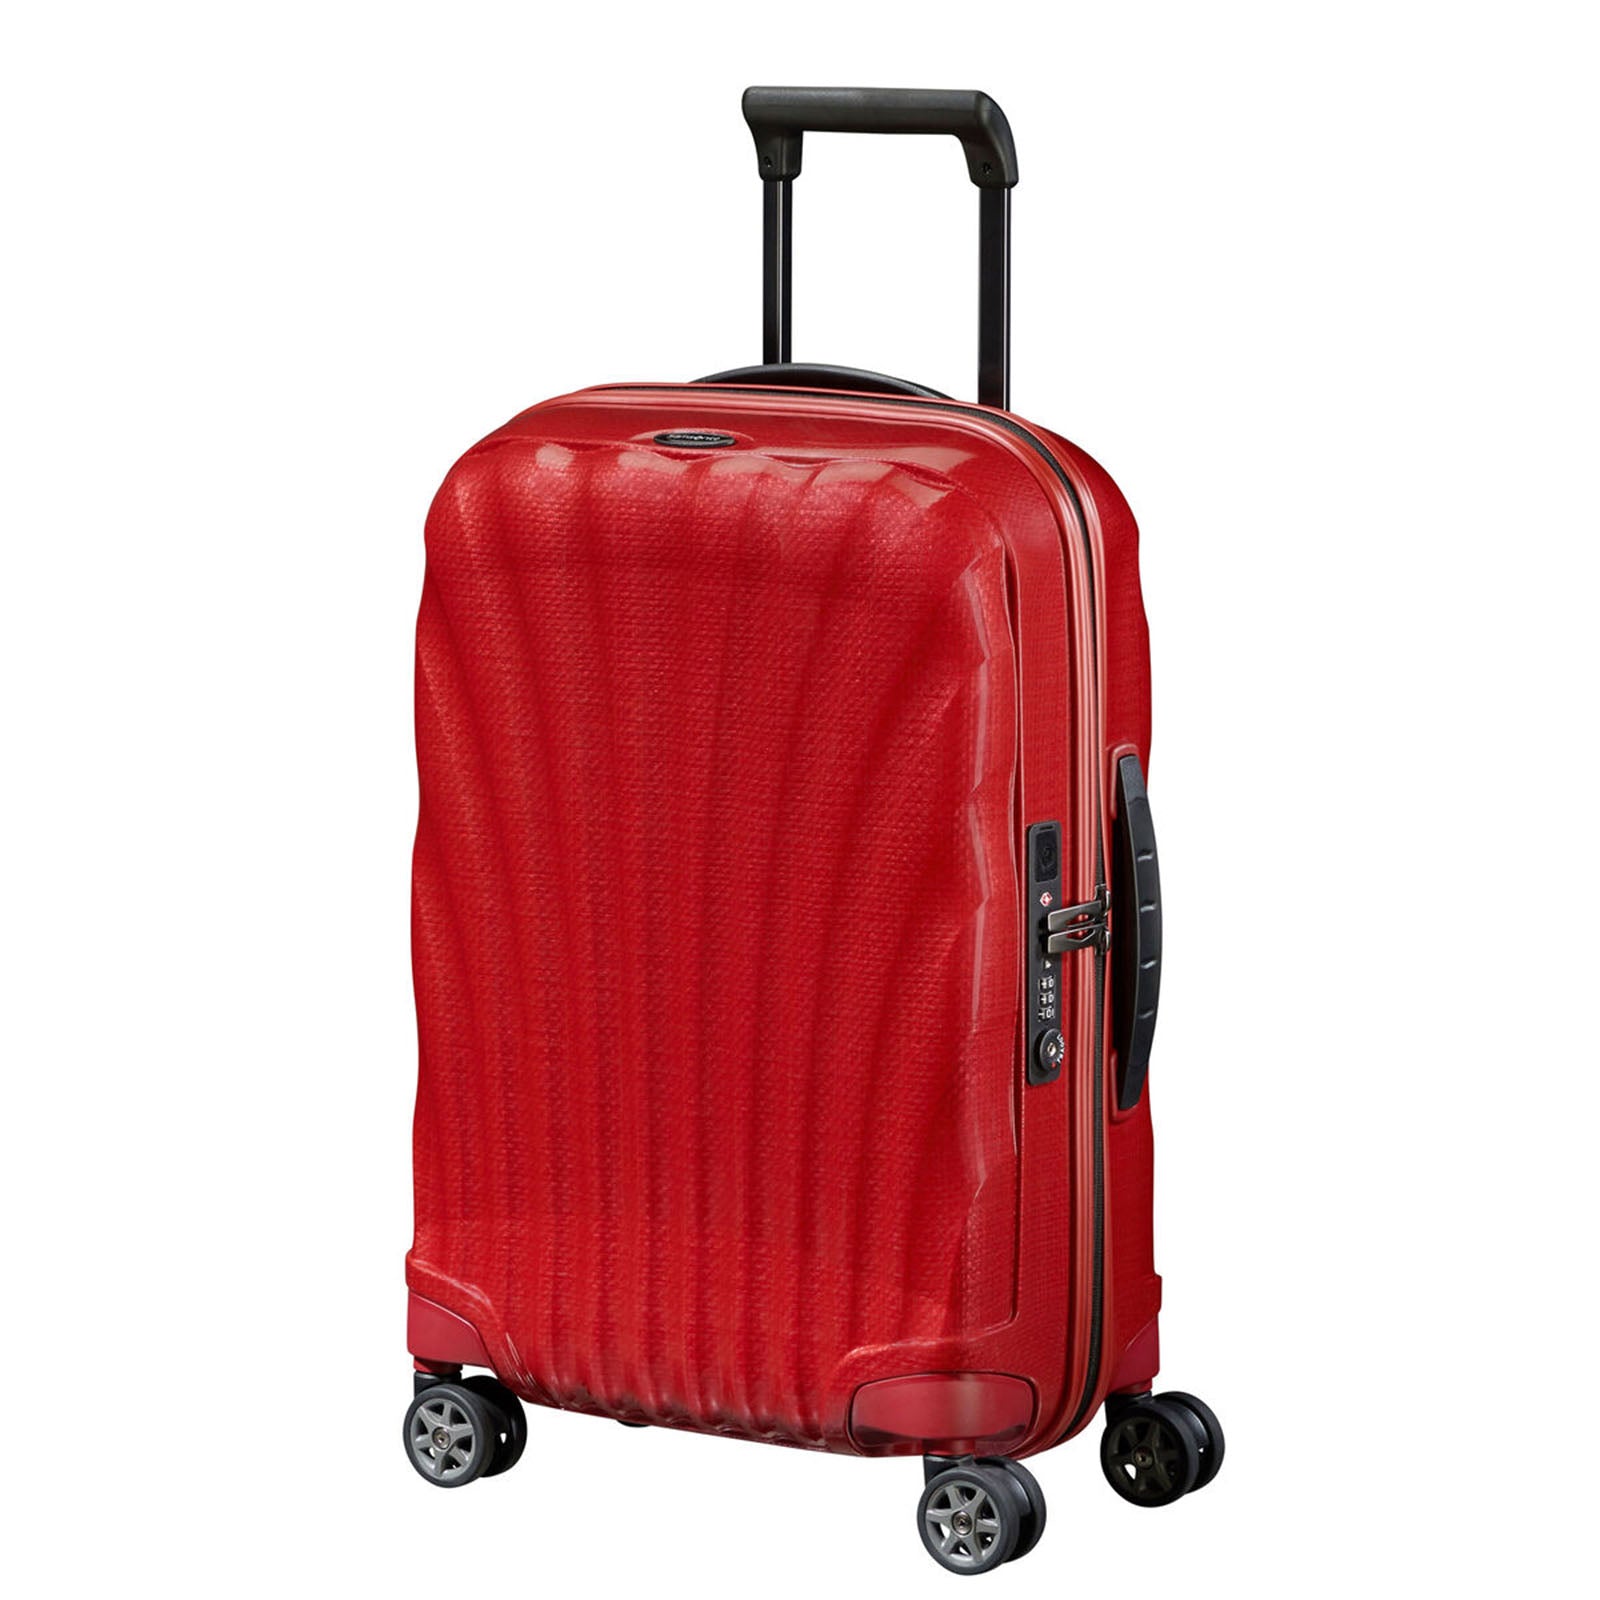 Samsonite-C-Lite-55cm-Suitcase-Chili-Red-Front-Angle